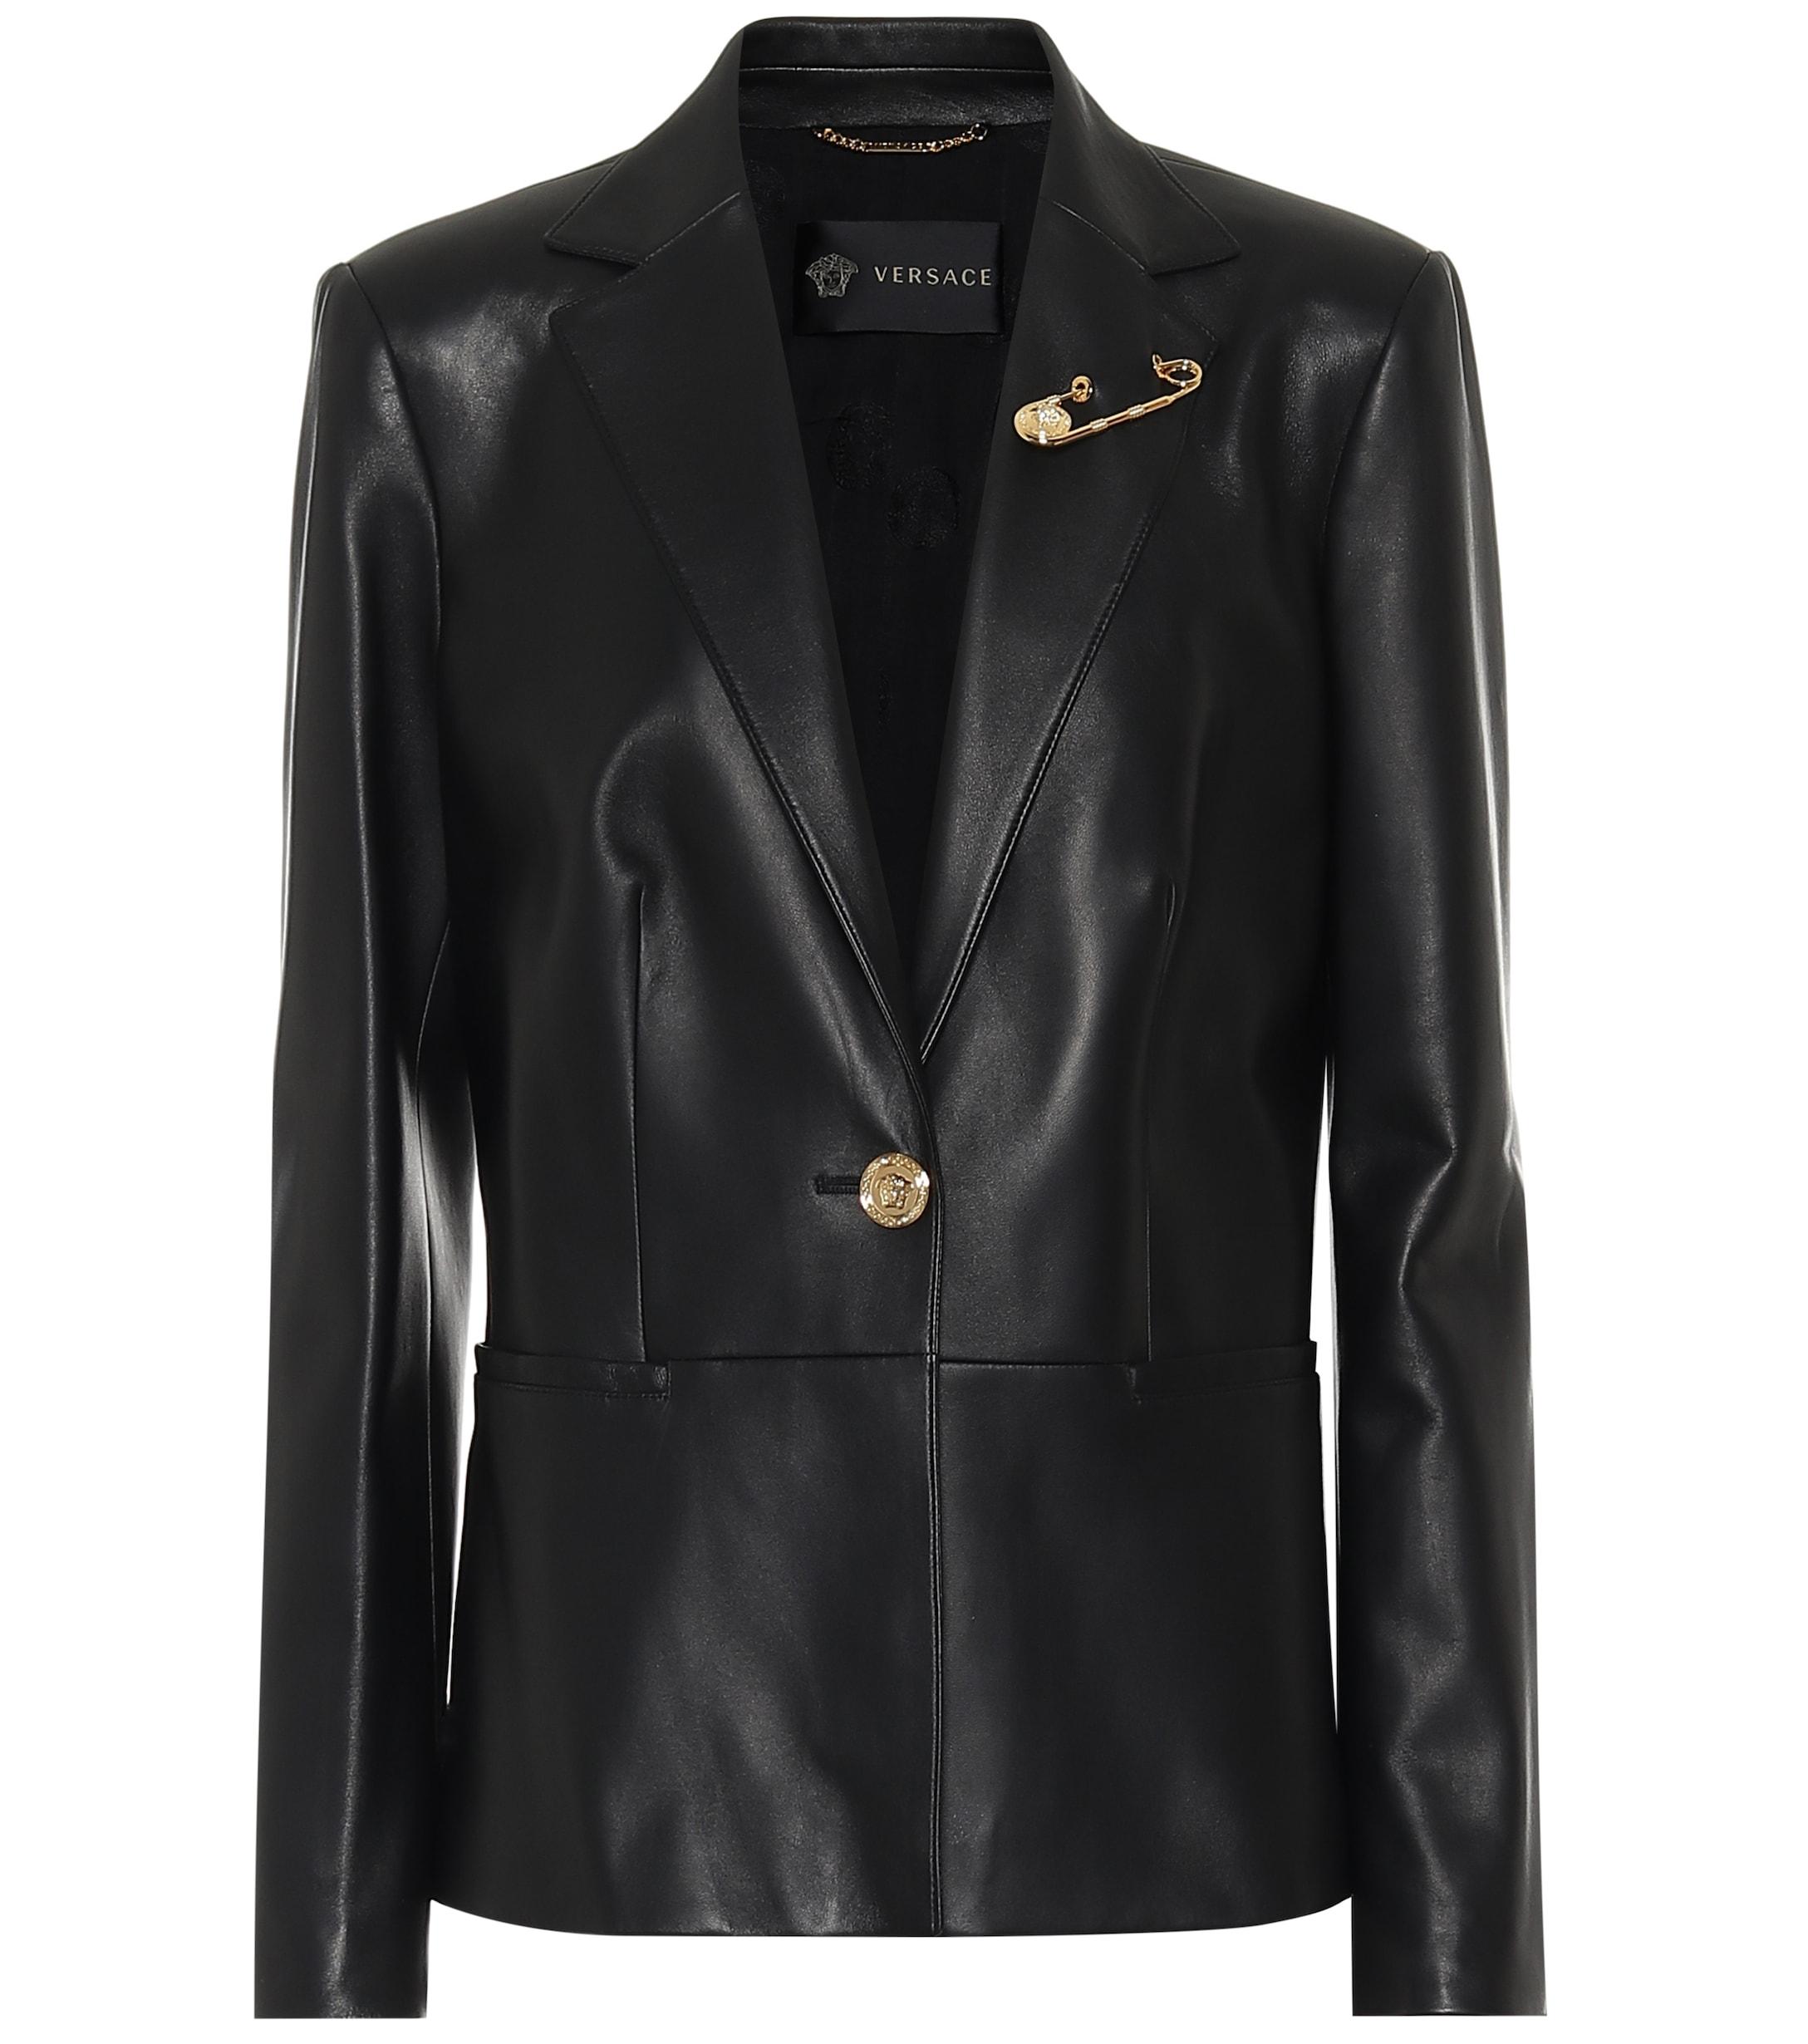 Versace Leather Blazer in Black - Lyst